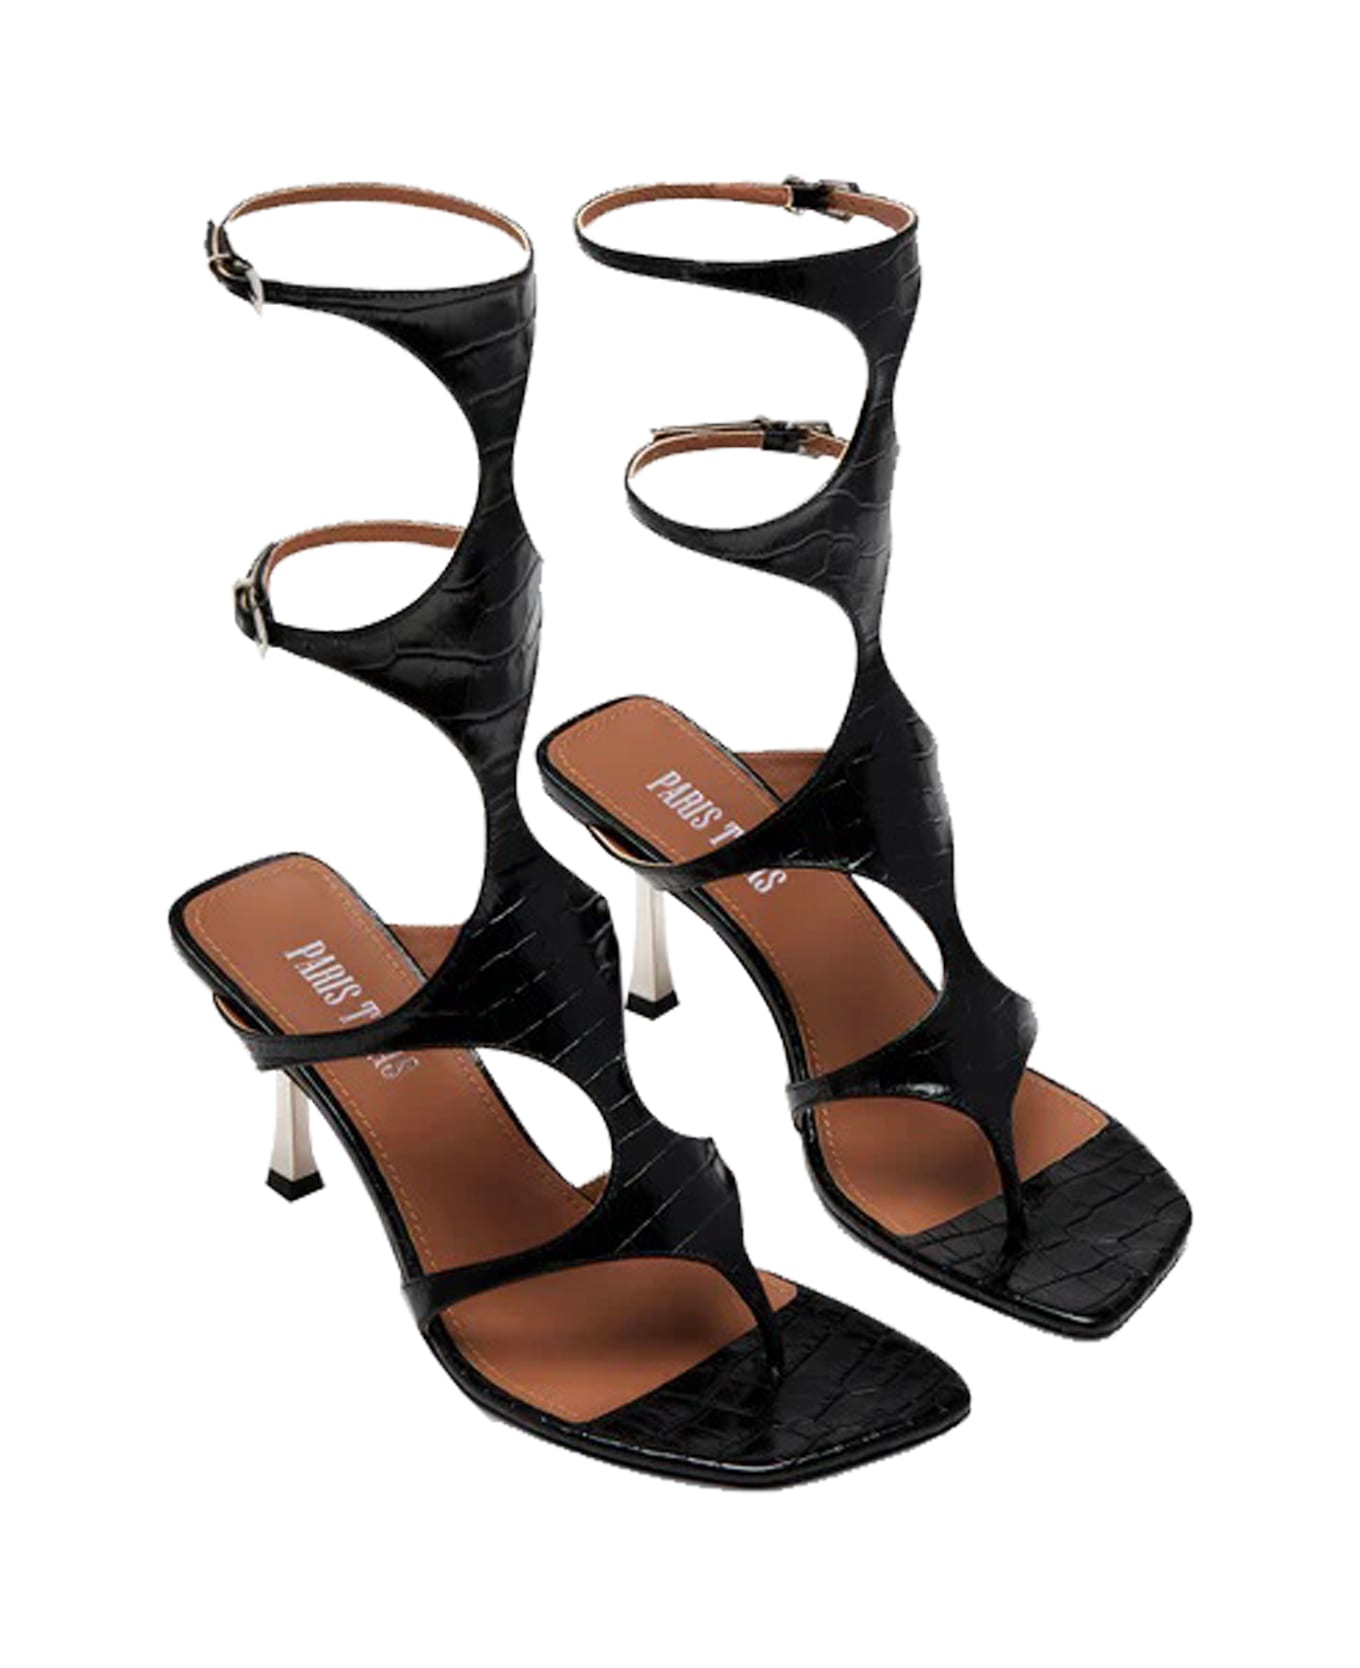 Paris Texas Heeled Sandals - Black